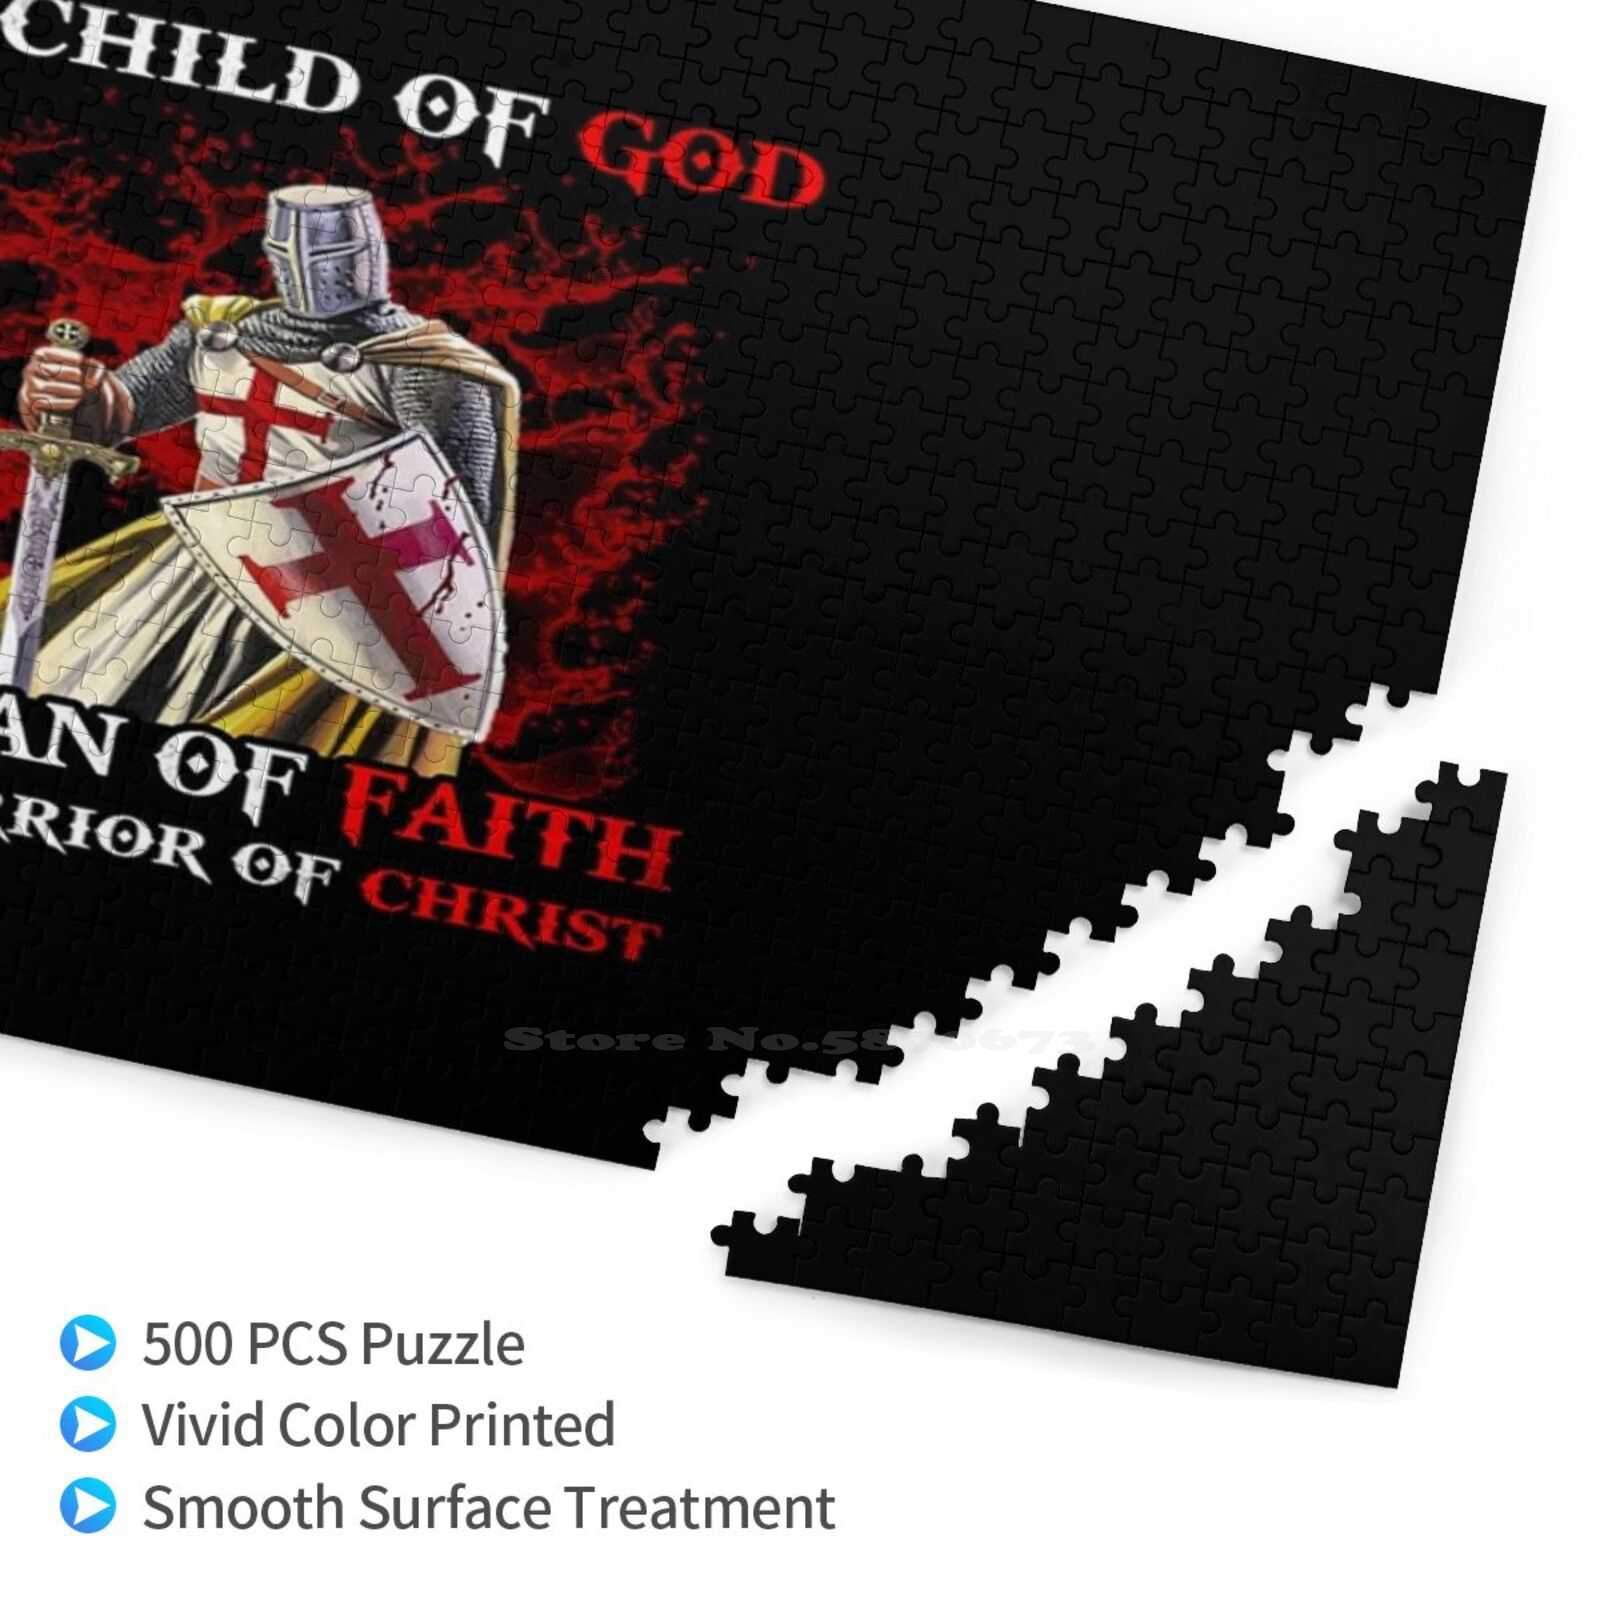 Knights Templar Commandery Puzzle - (A Child Of God A Man Of Faith) Jigsaw - Bricks Masons